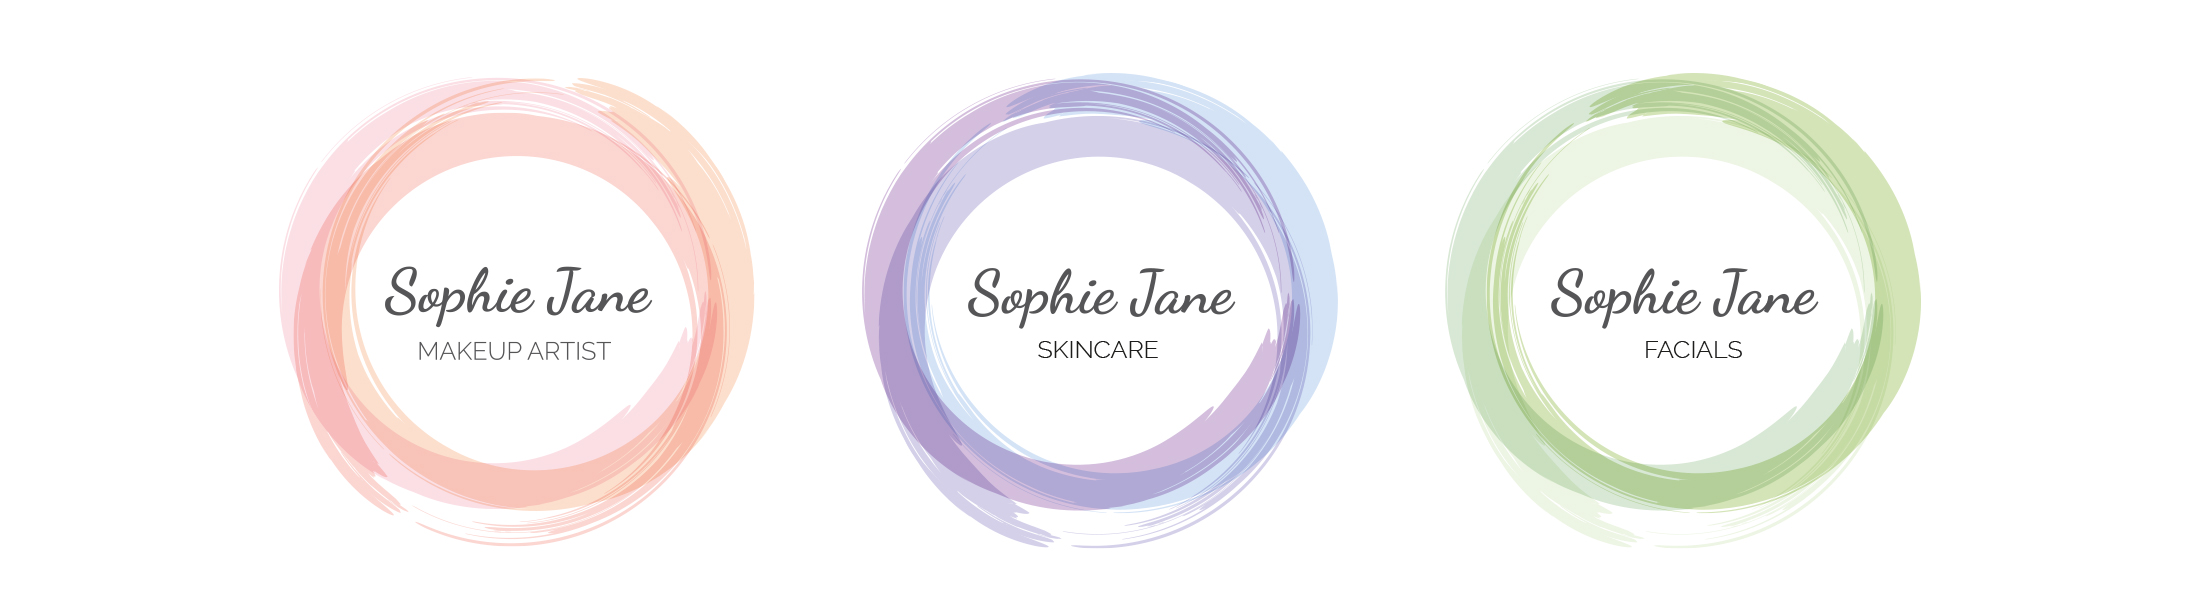 Sophie Jane logo variations